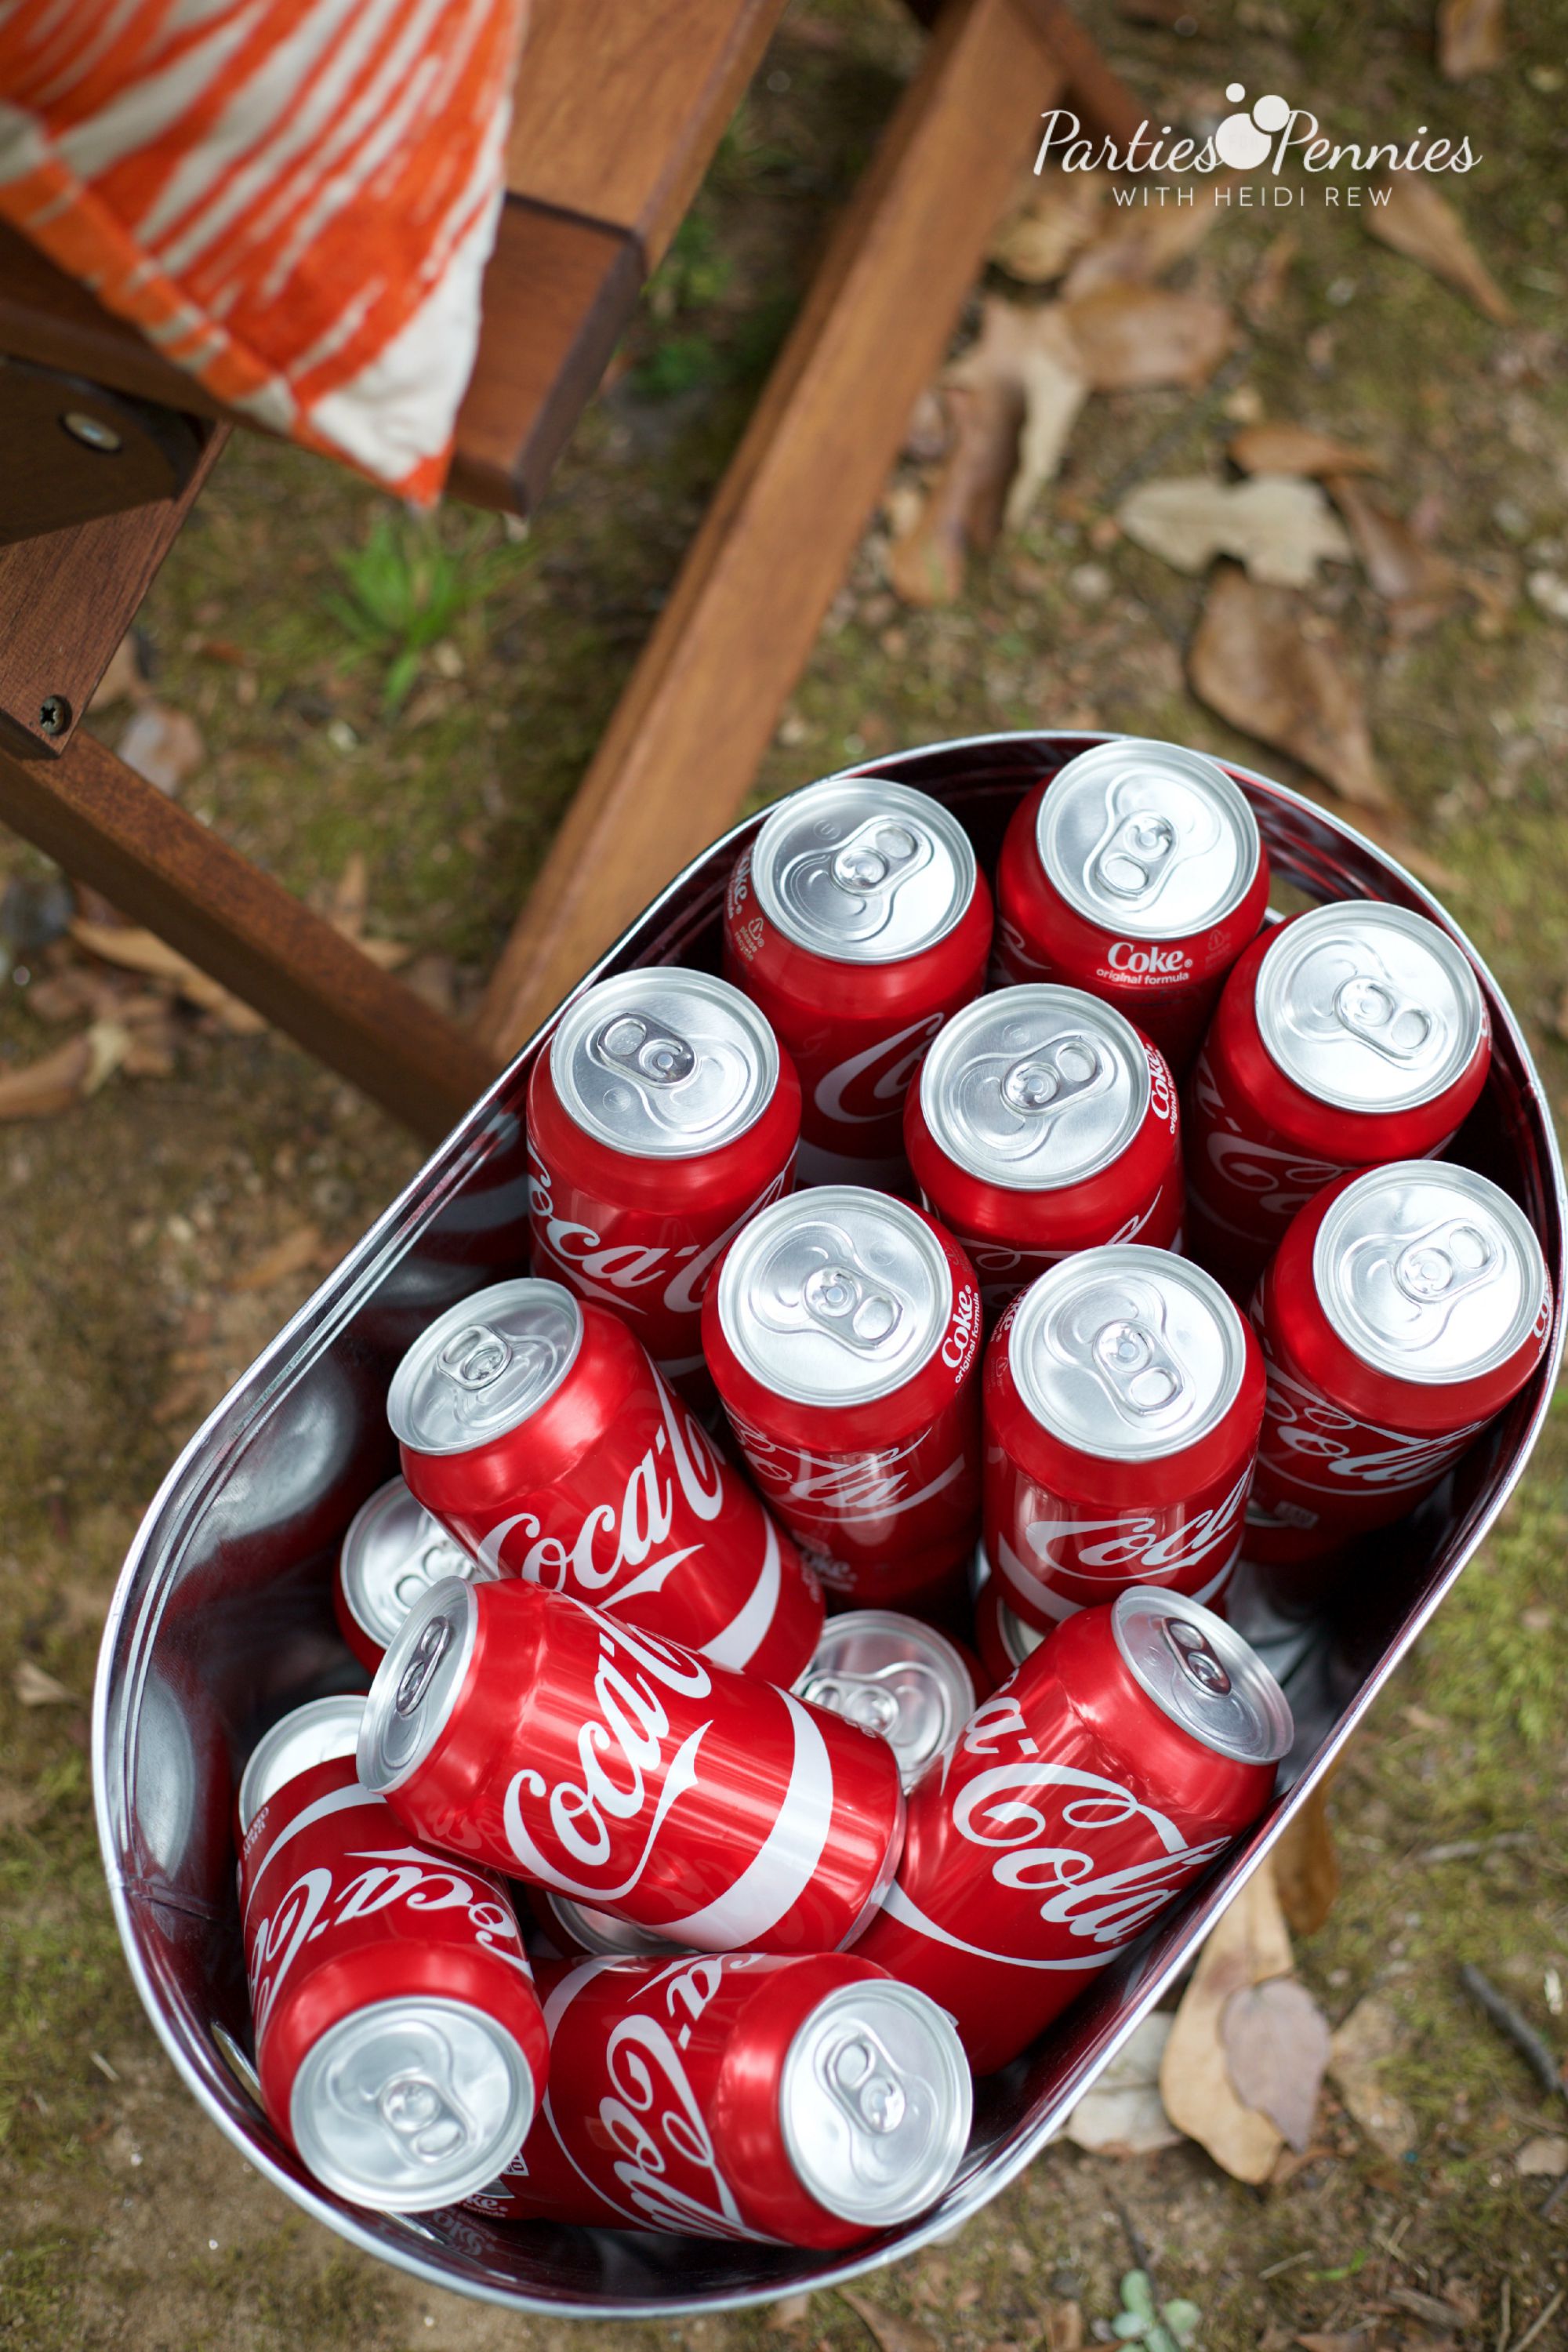 Coca-Cola Fall Football Sam's Club | How to Throw a Tailgate Party |PartiesforPennies.com | #tailgate #floridagators #universityofflorida #shareyourspirit 